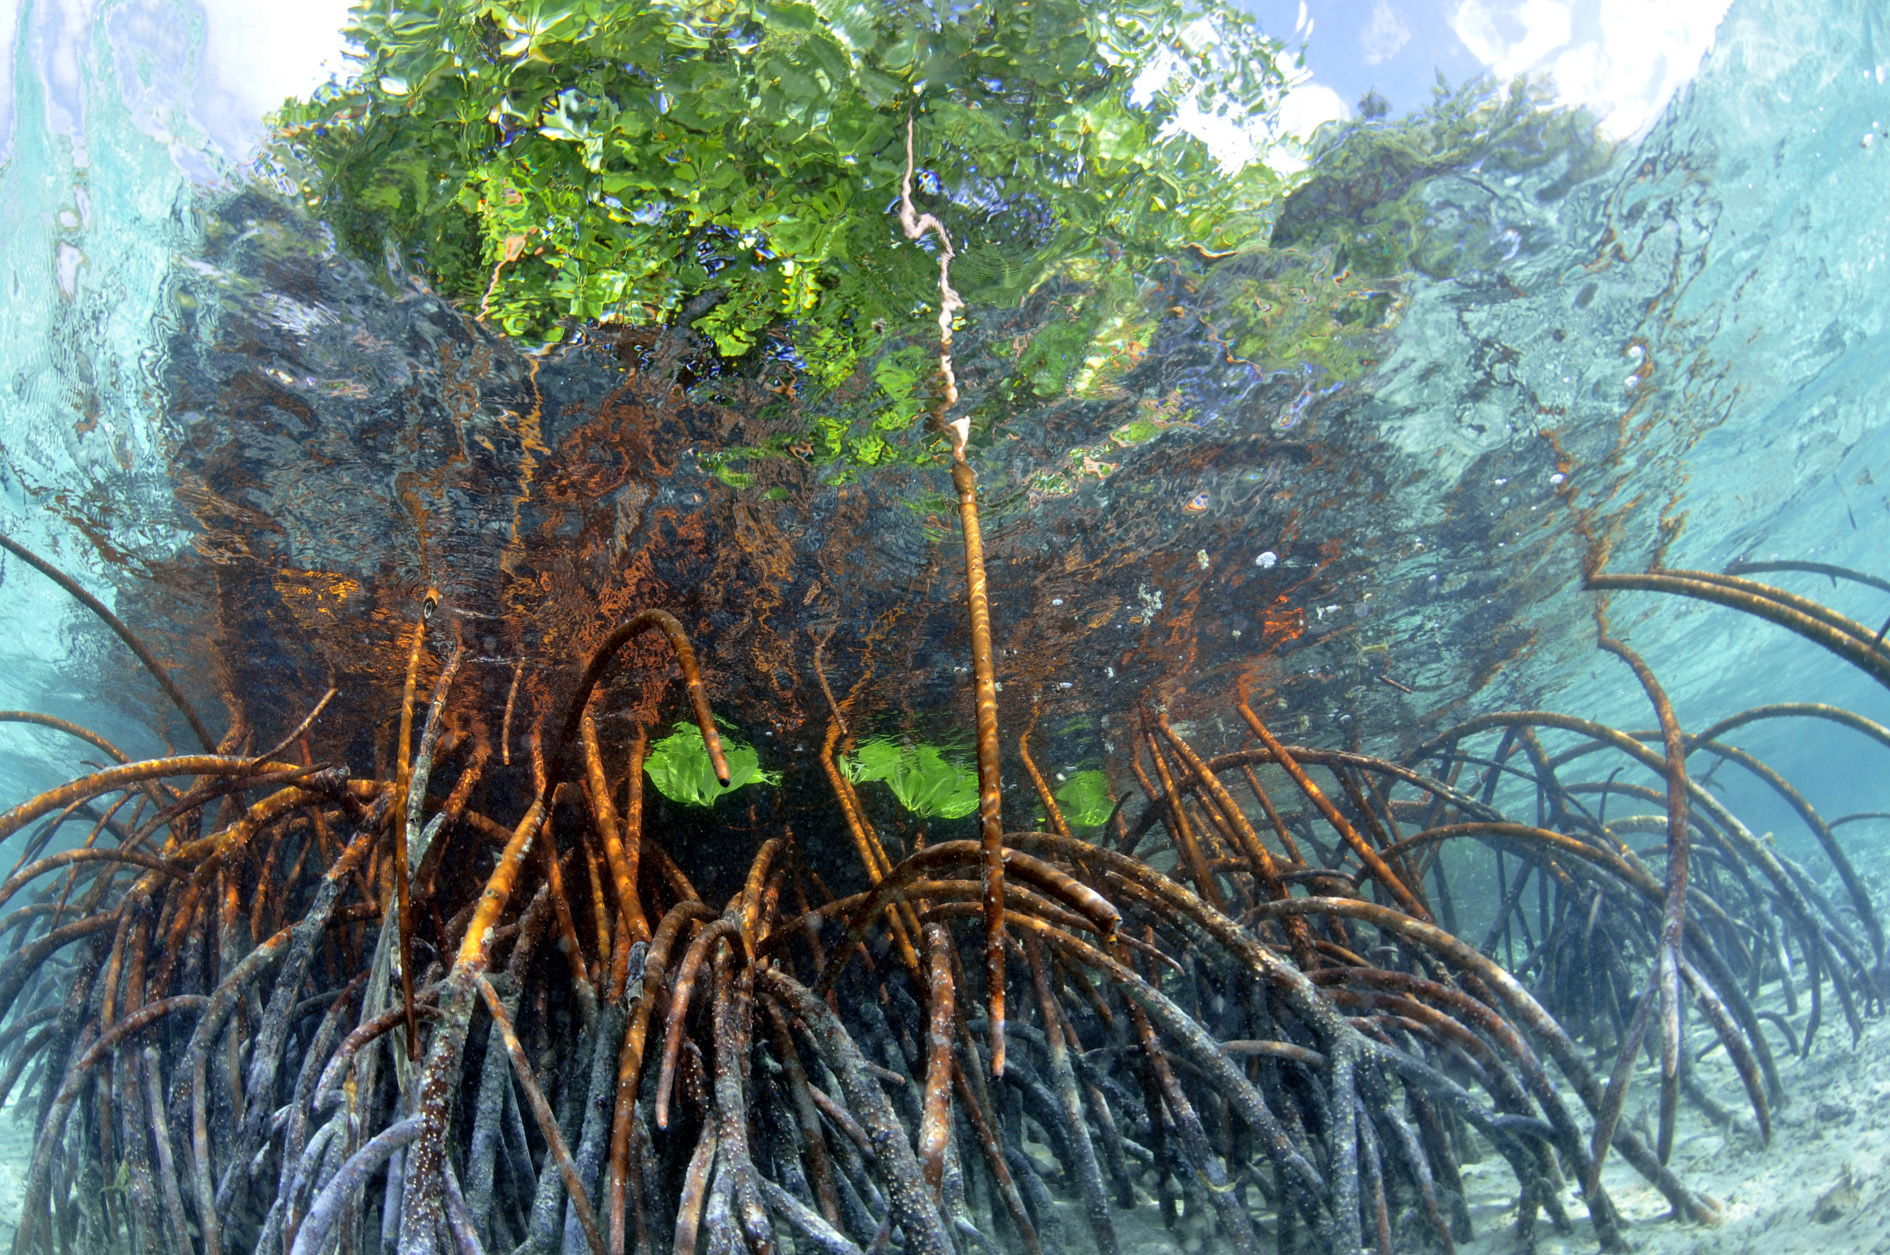 Submerged Mangrove